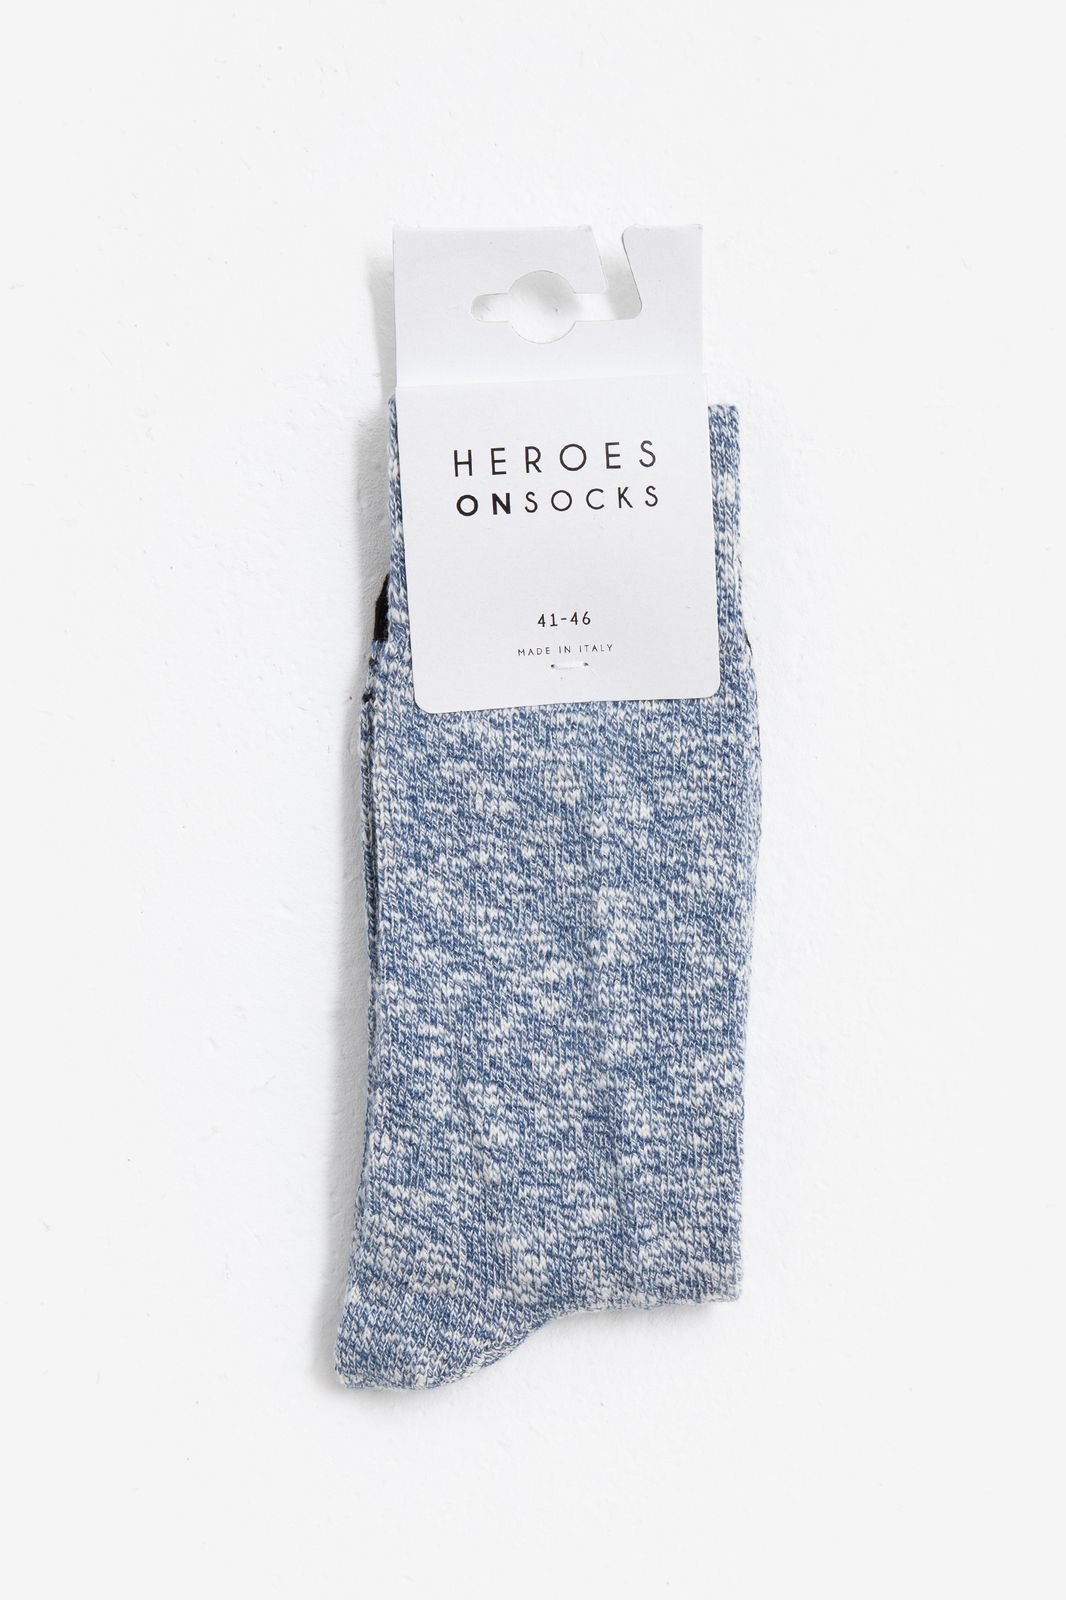 Heroes on Socks speckled blauwe sokken